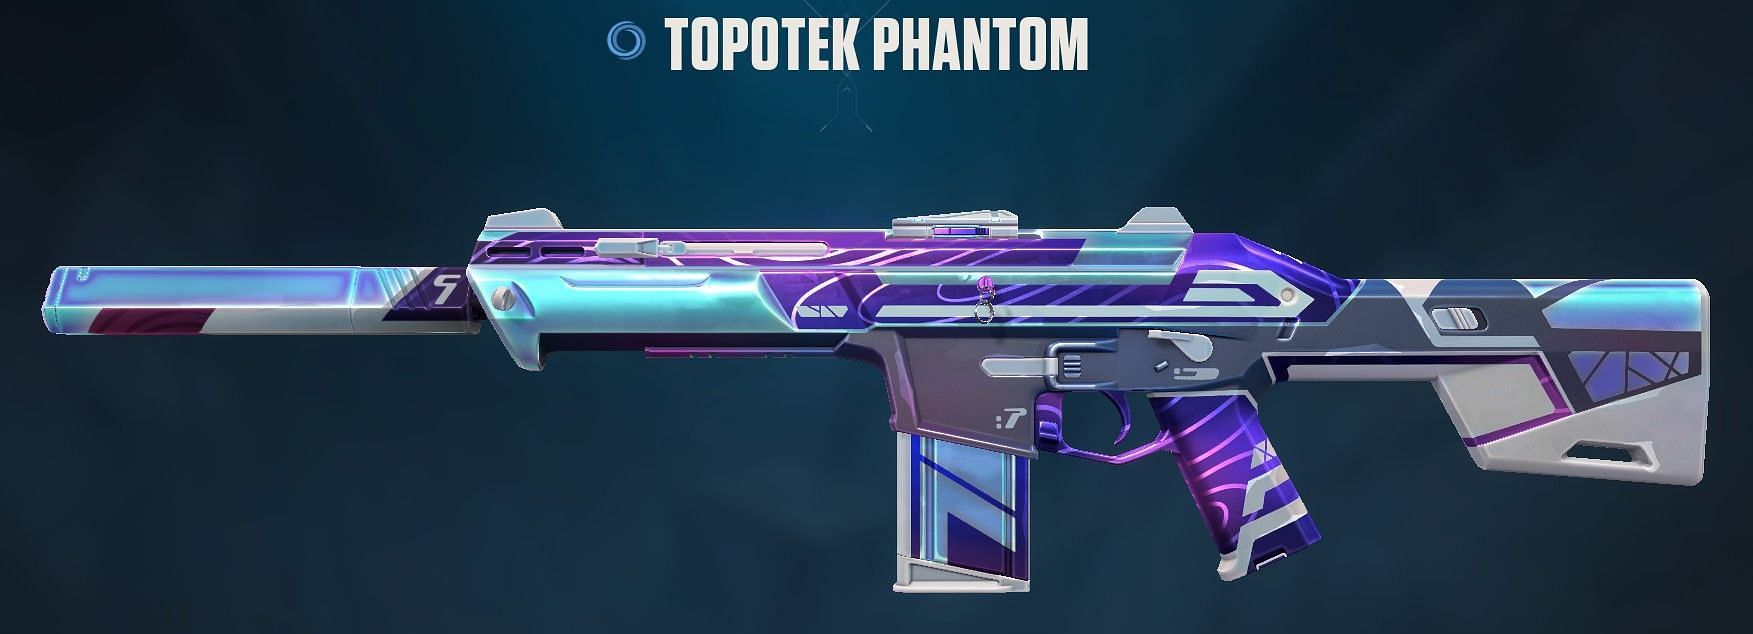 Topotek Phantom (Image via Riot Games)